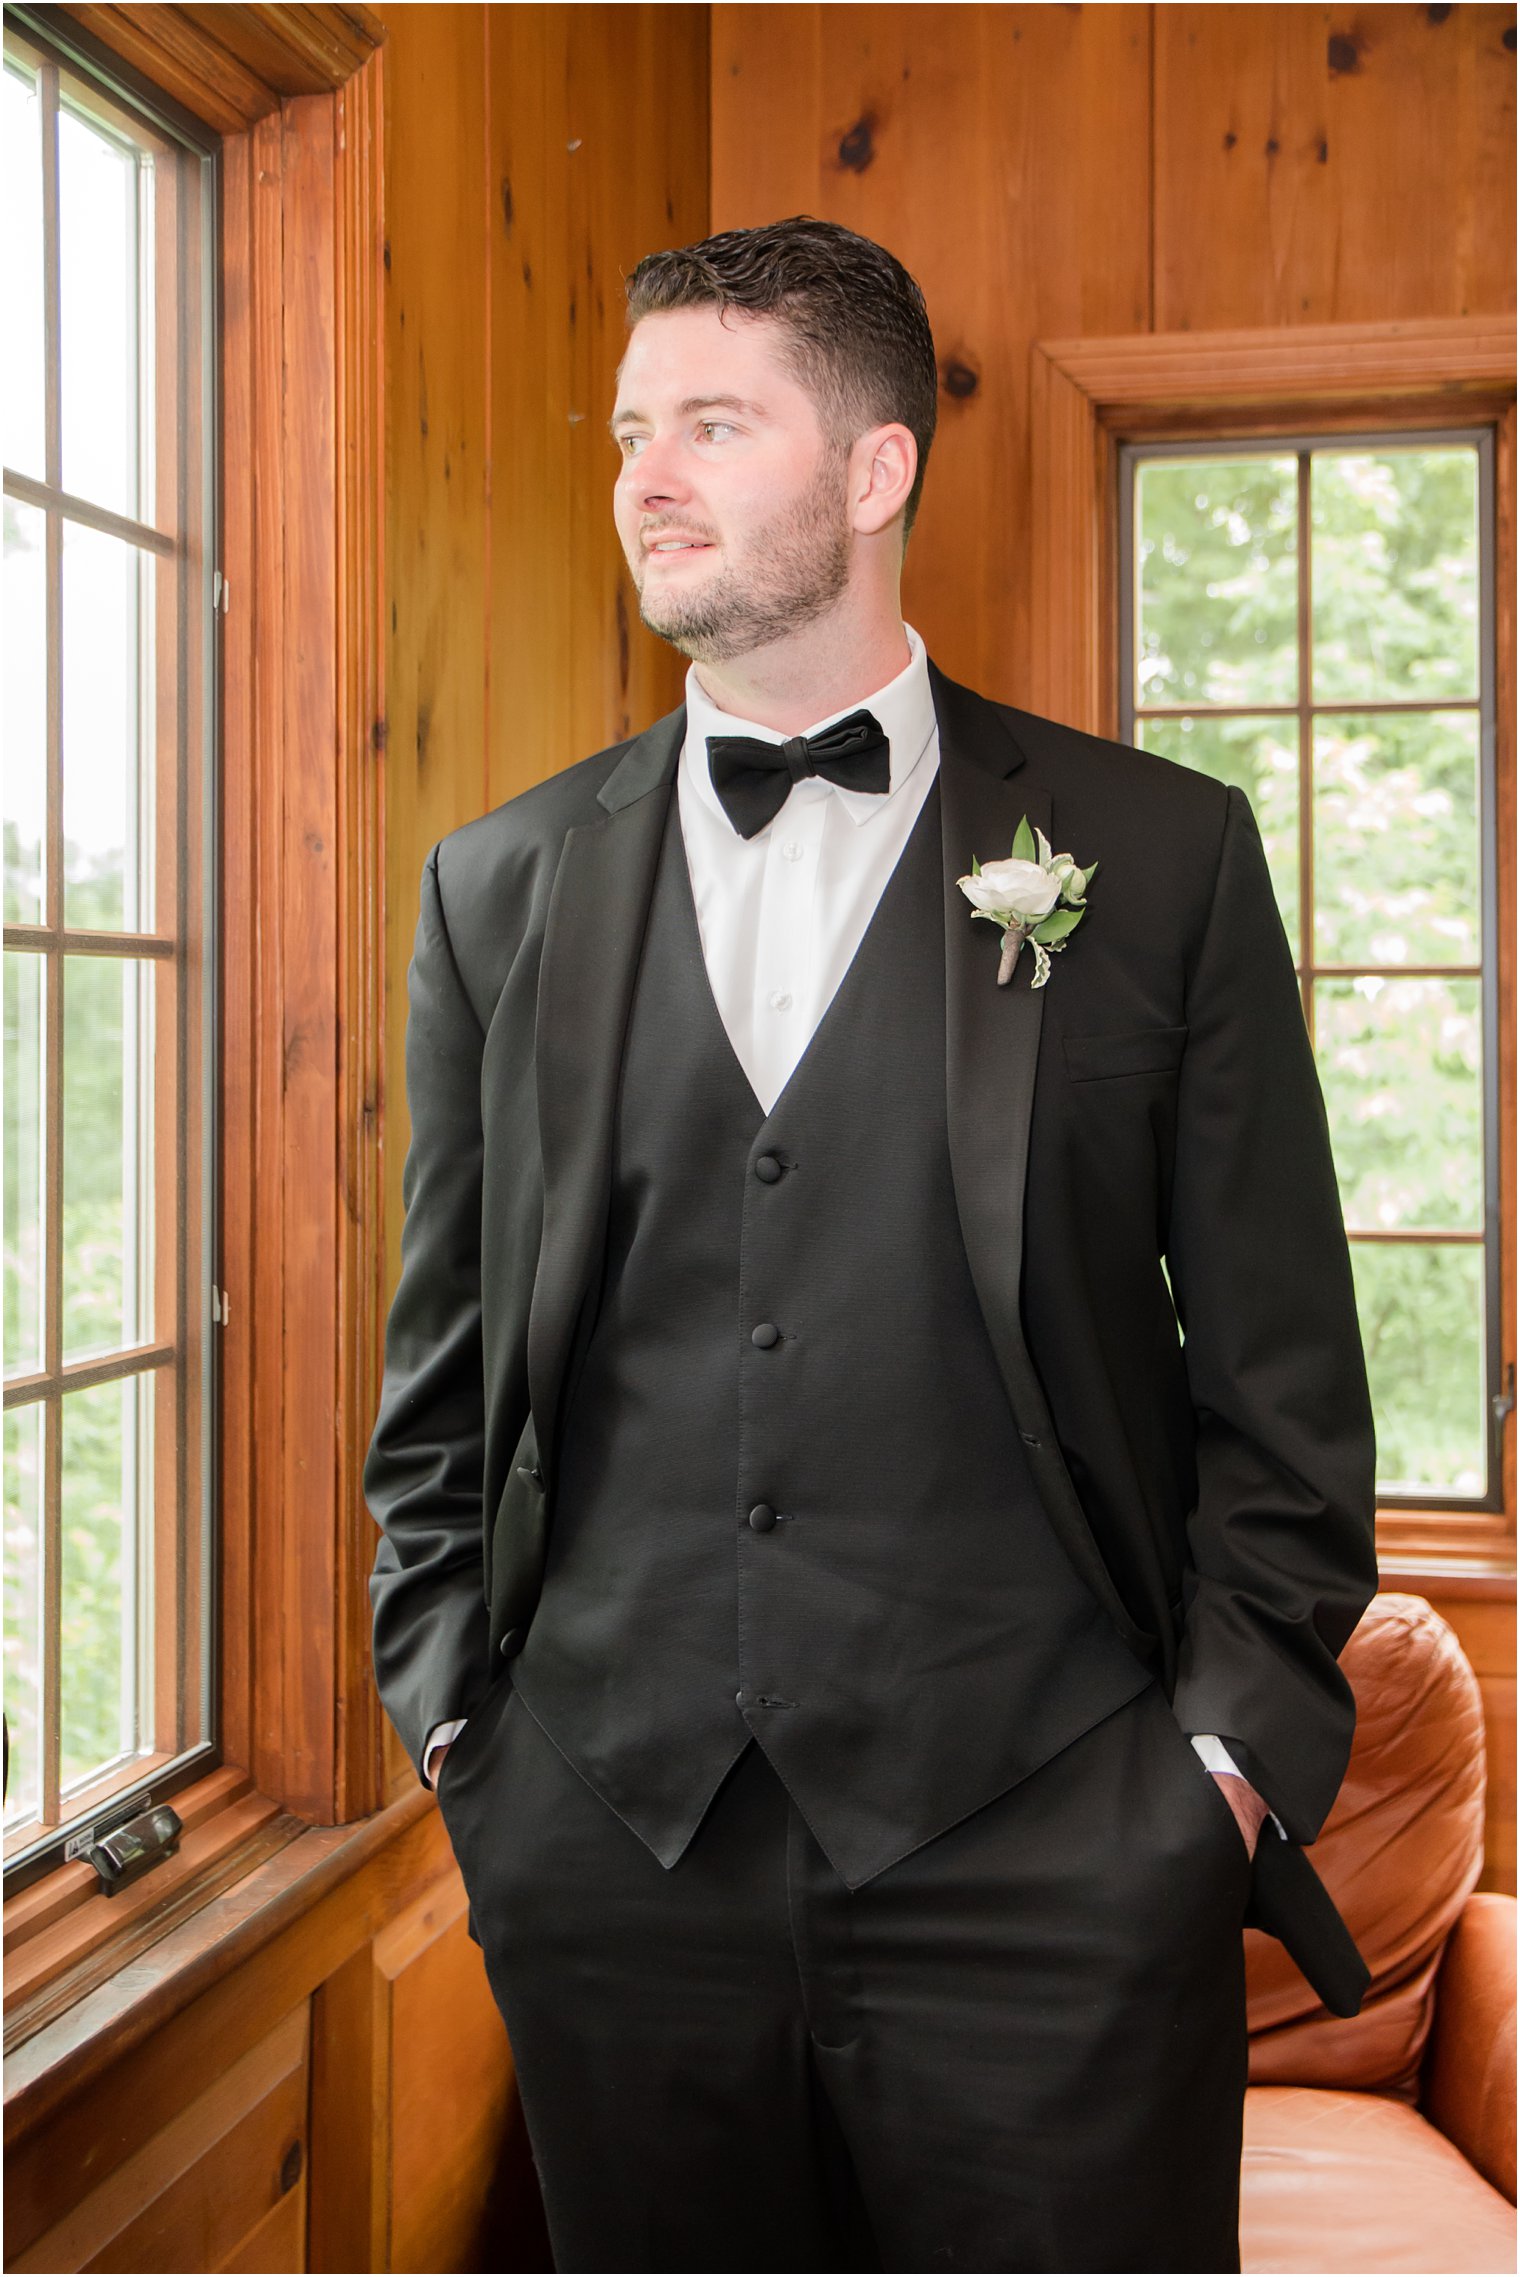 elegant groom portrait by a window